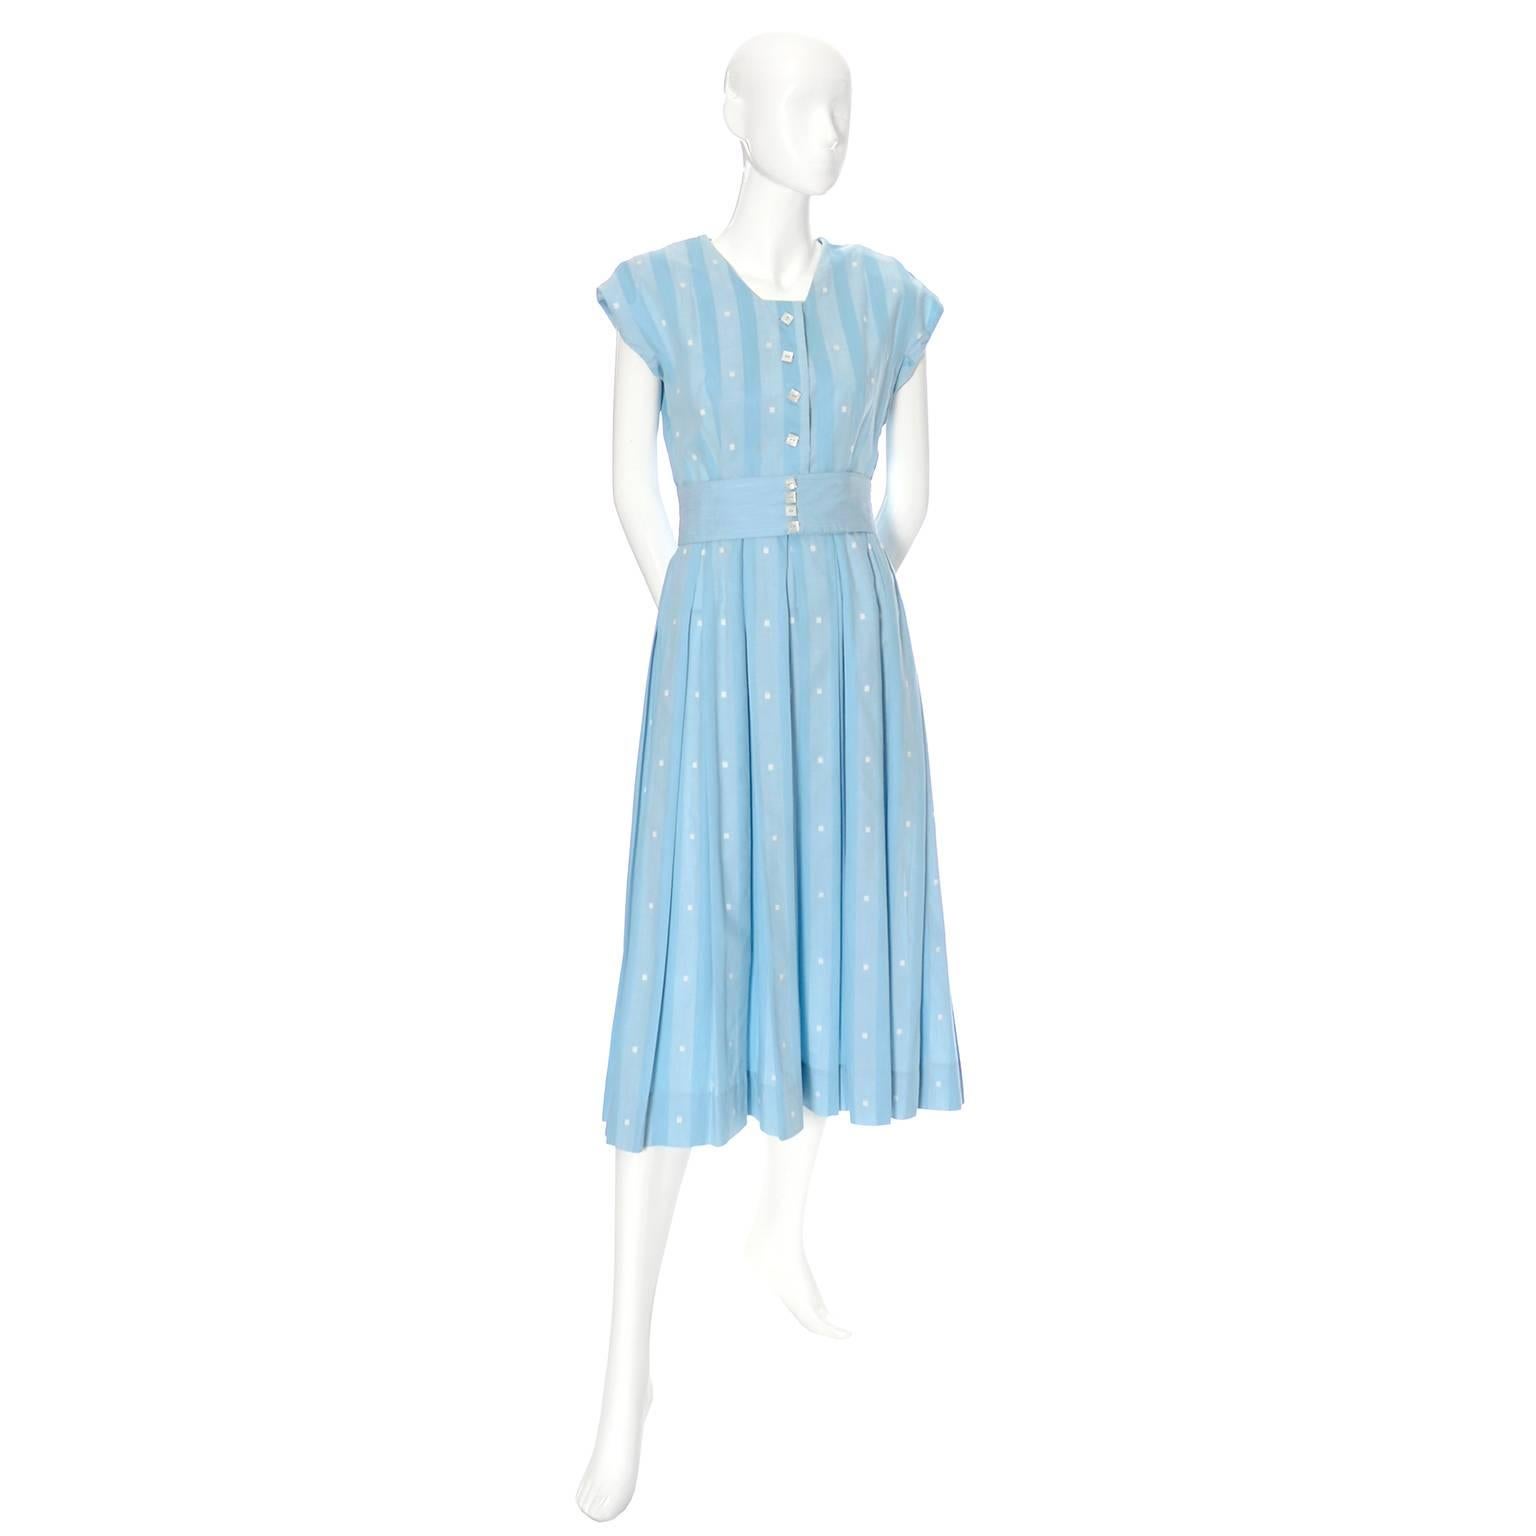 Blue 1950s Original Vintage Dress Worn By Jessica Chastain Tree of Life Movie Costume